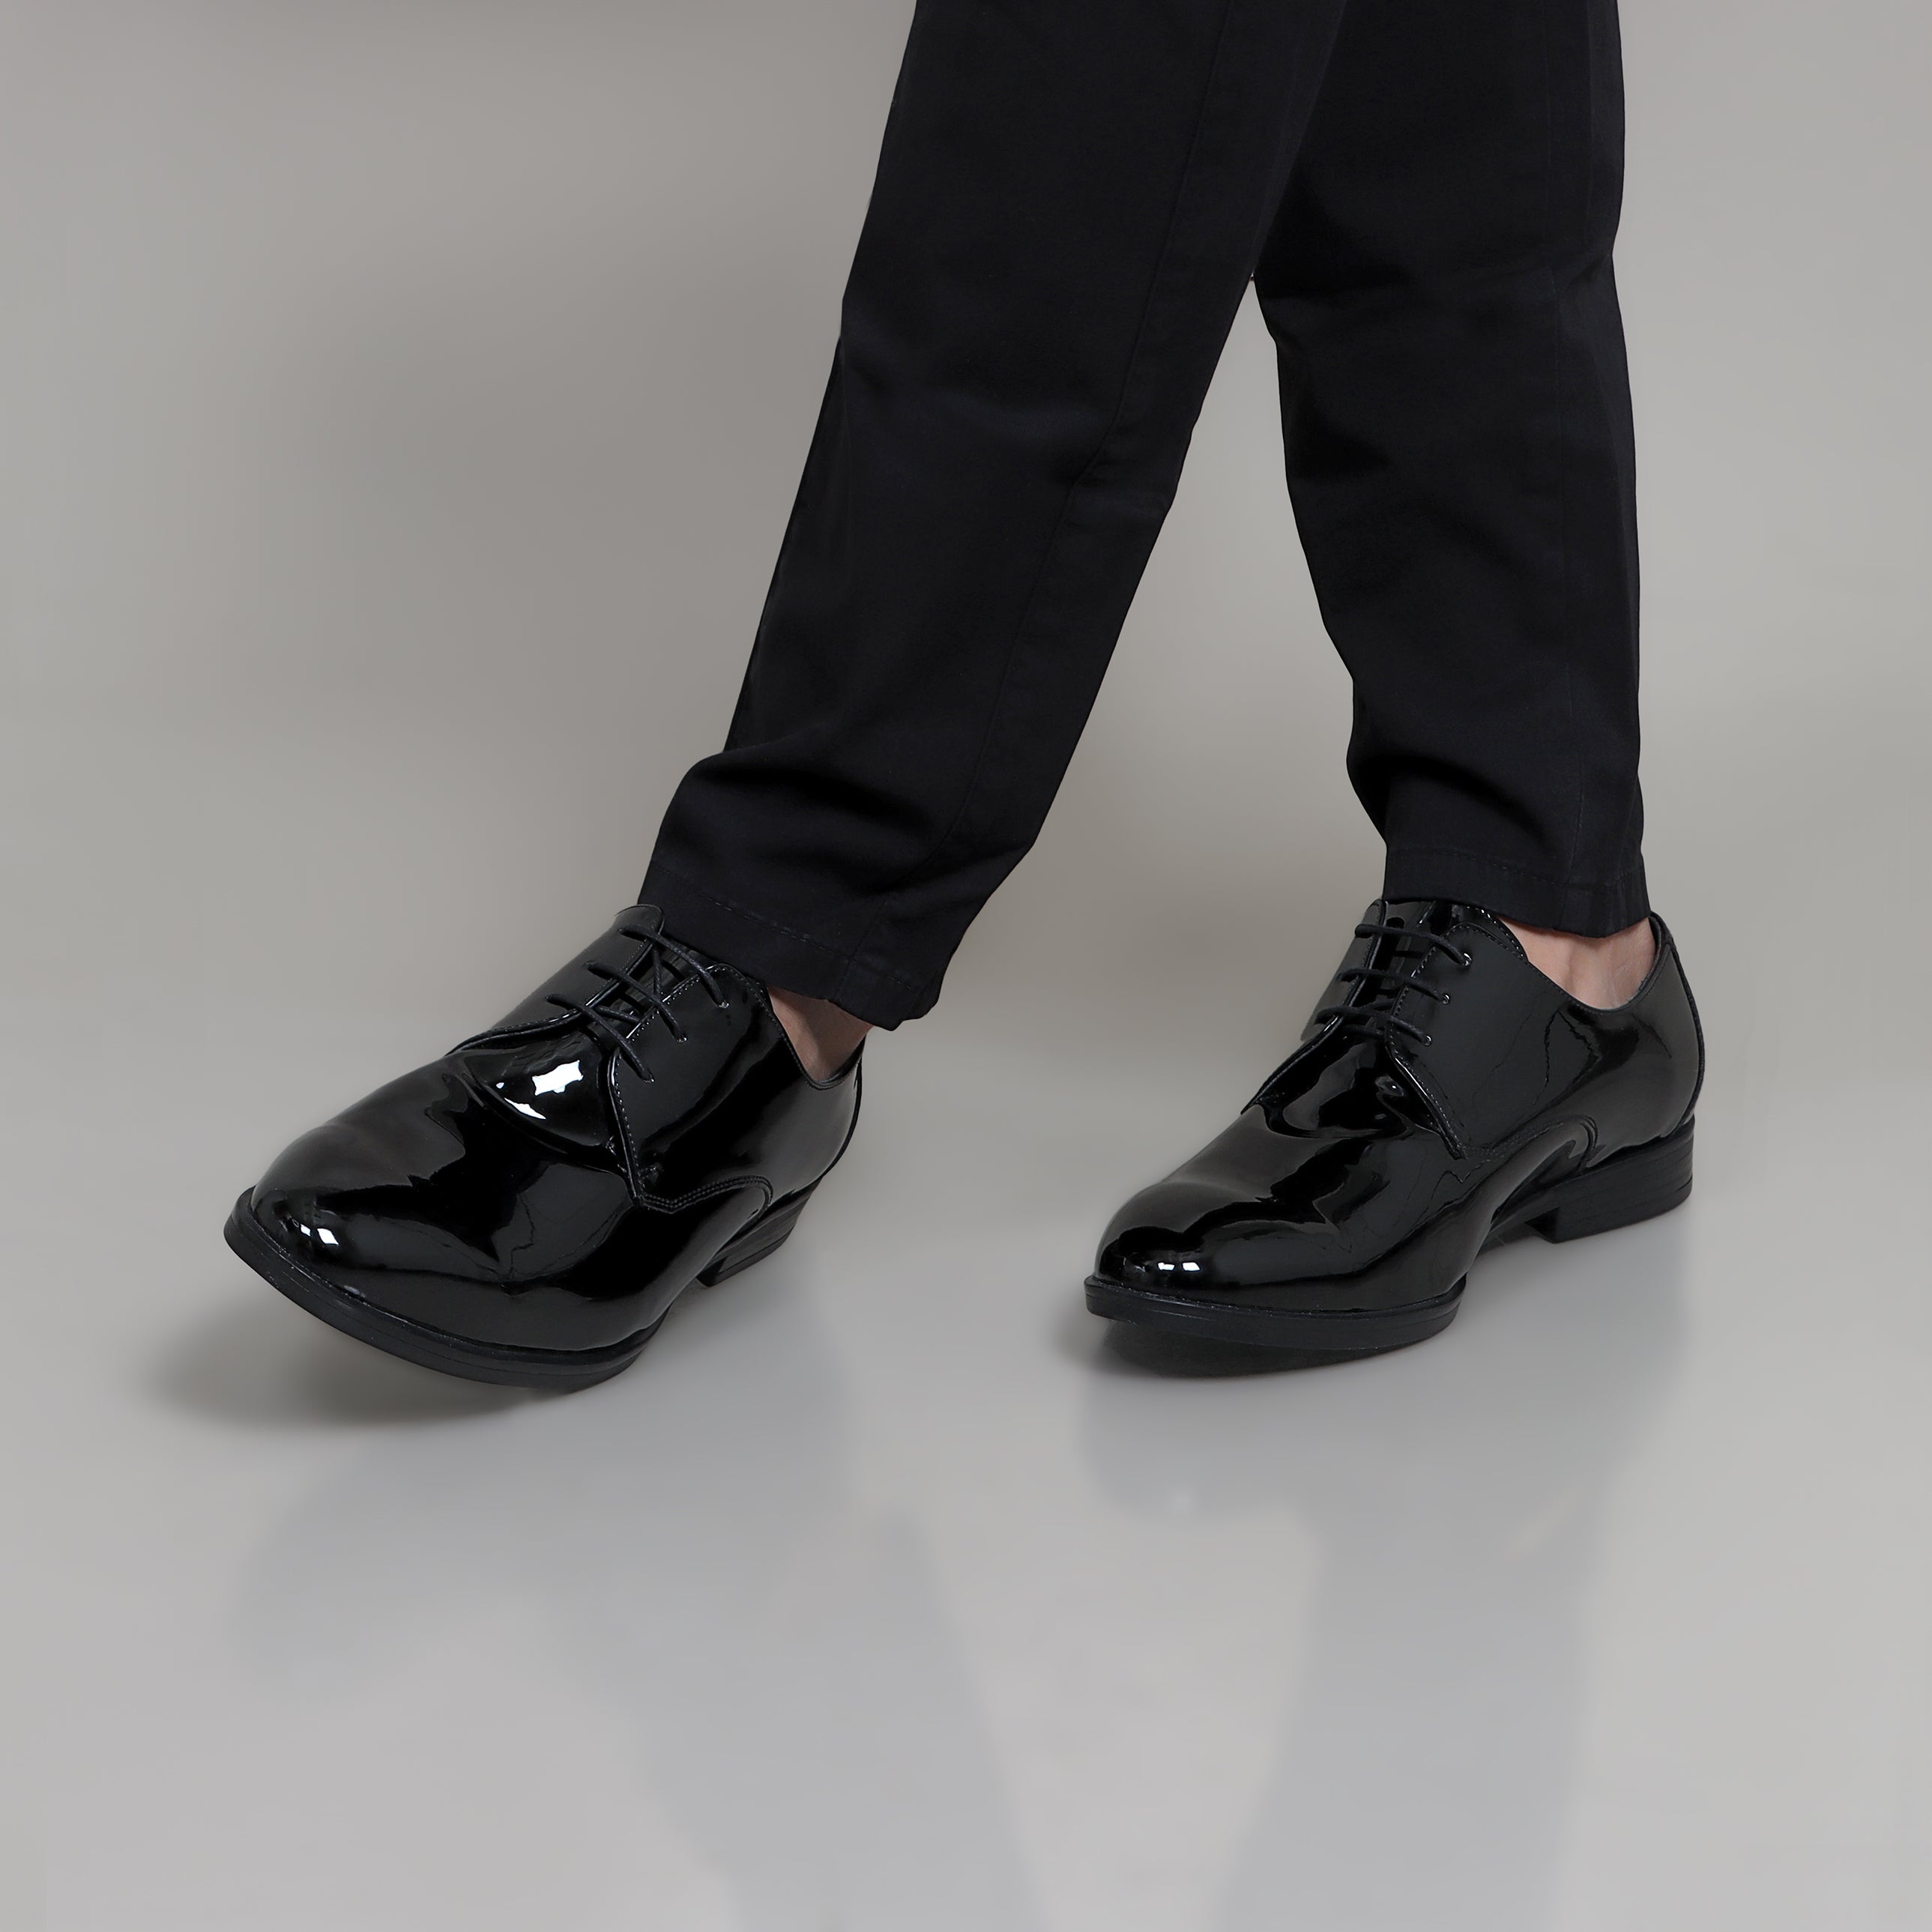 Midnight Elegance: Black Shiny Tuxedo Shoes